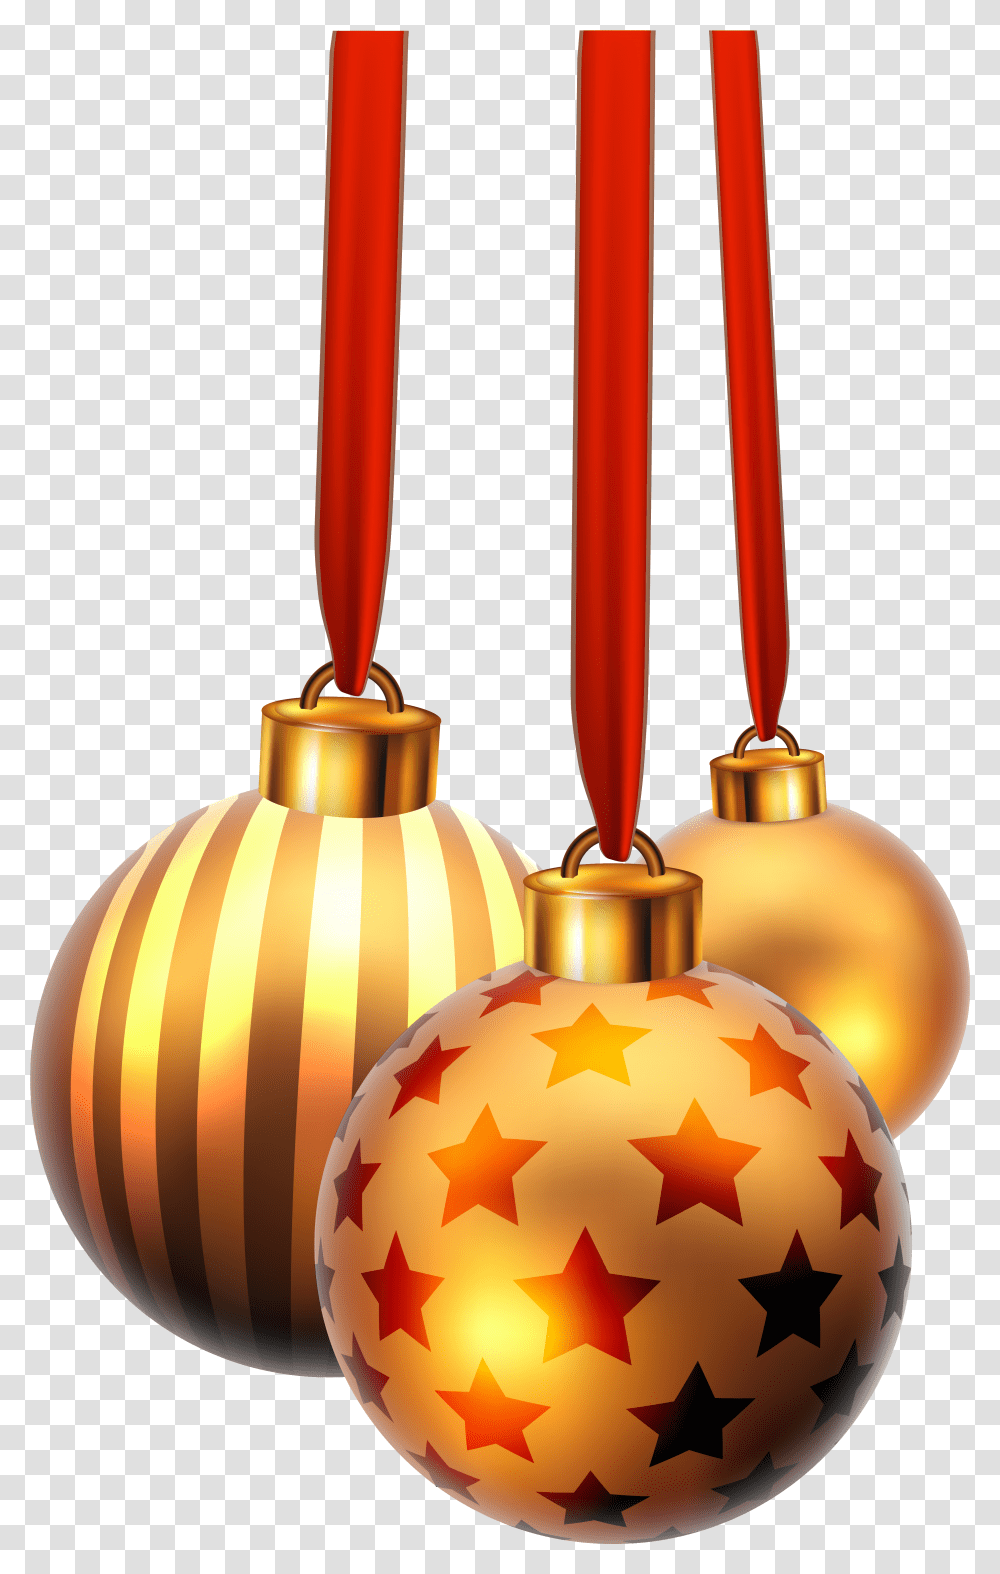 Download Free Christmas Balls Image Christmas Ball, Lamp, Ornament Transparent Png